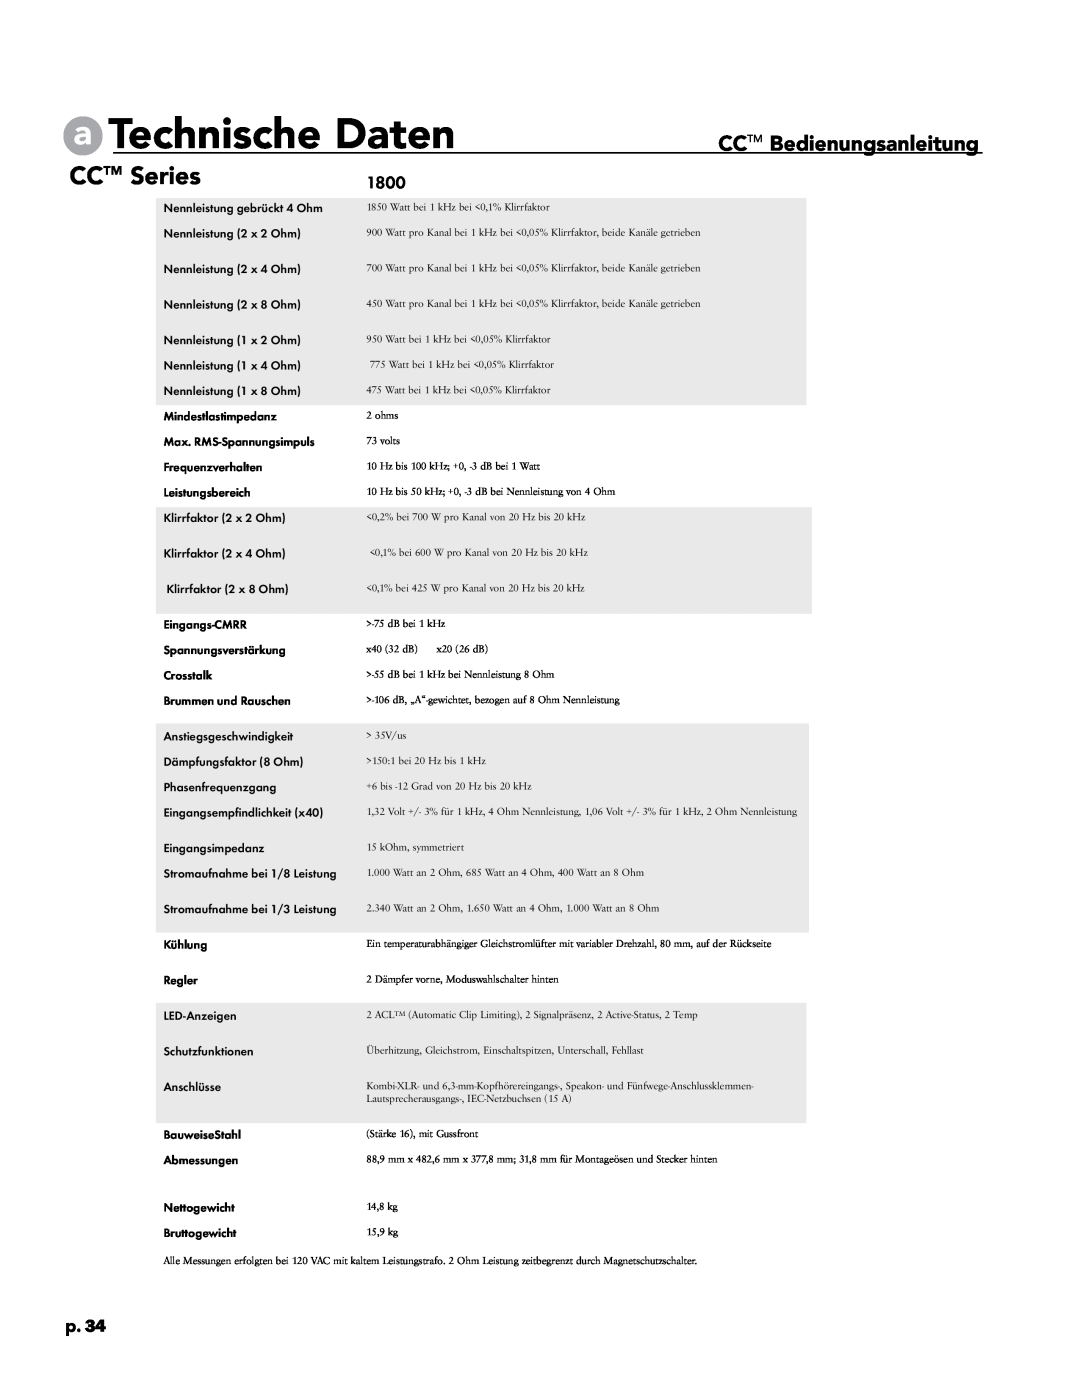 Crest Audio CC 4000, CC 5500, CC 2800, CC 1800 a Technische Daten, CCTM Series, CCTM Bedienungsanleitung, p.34 